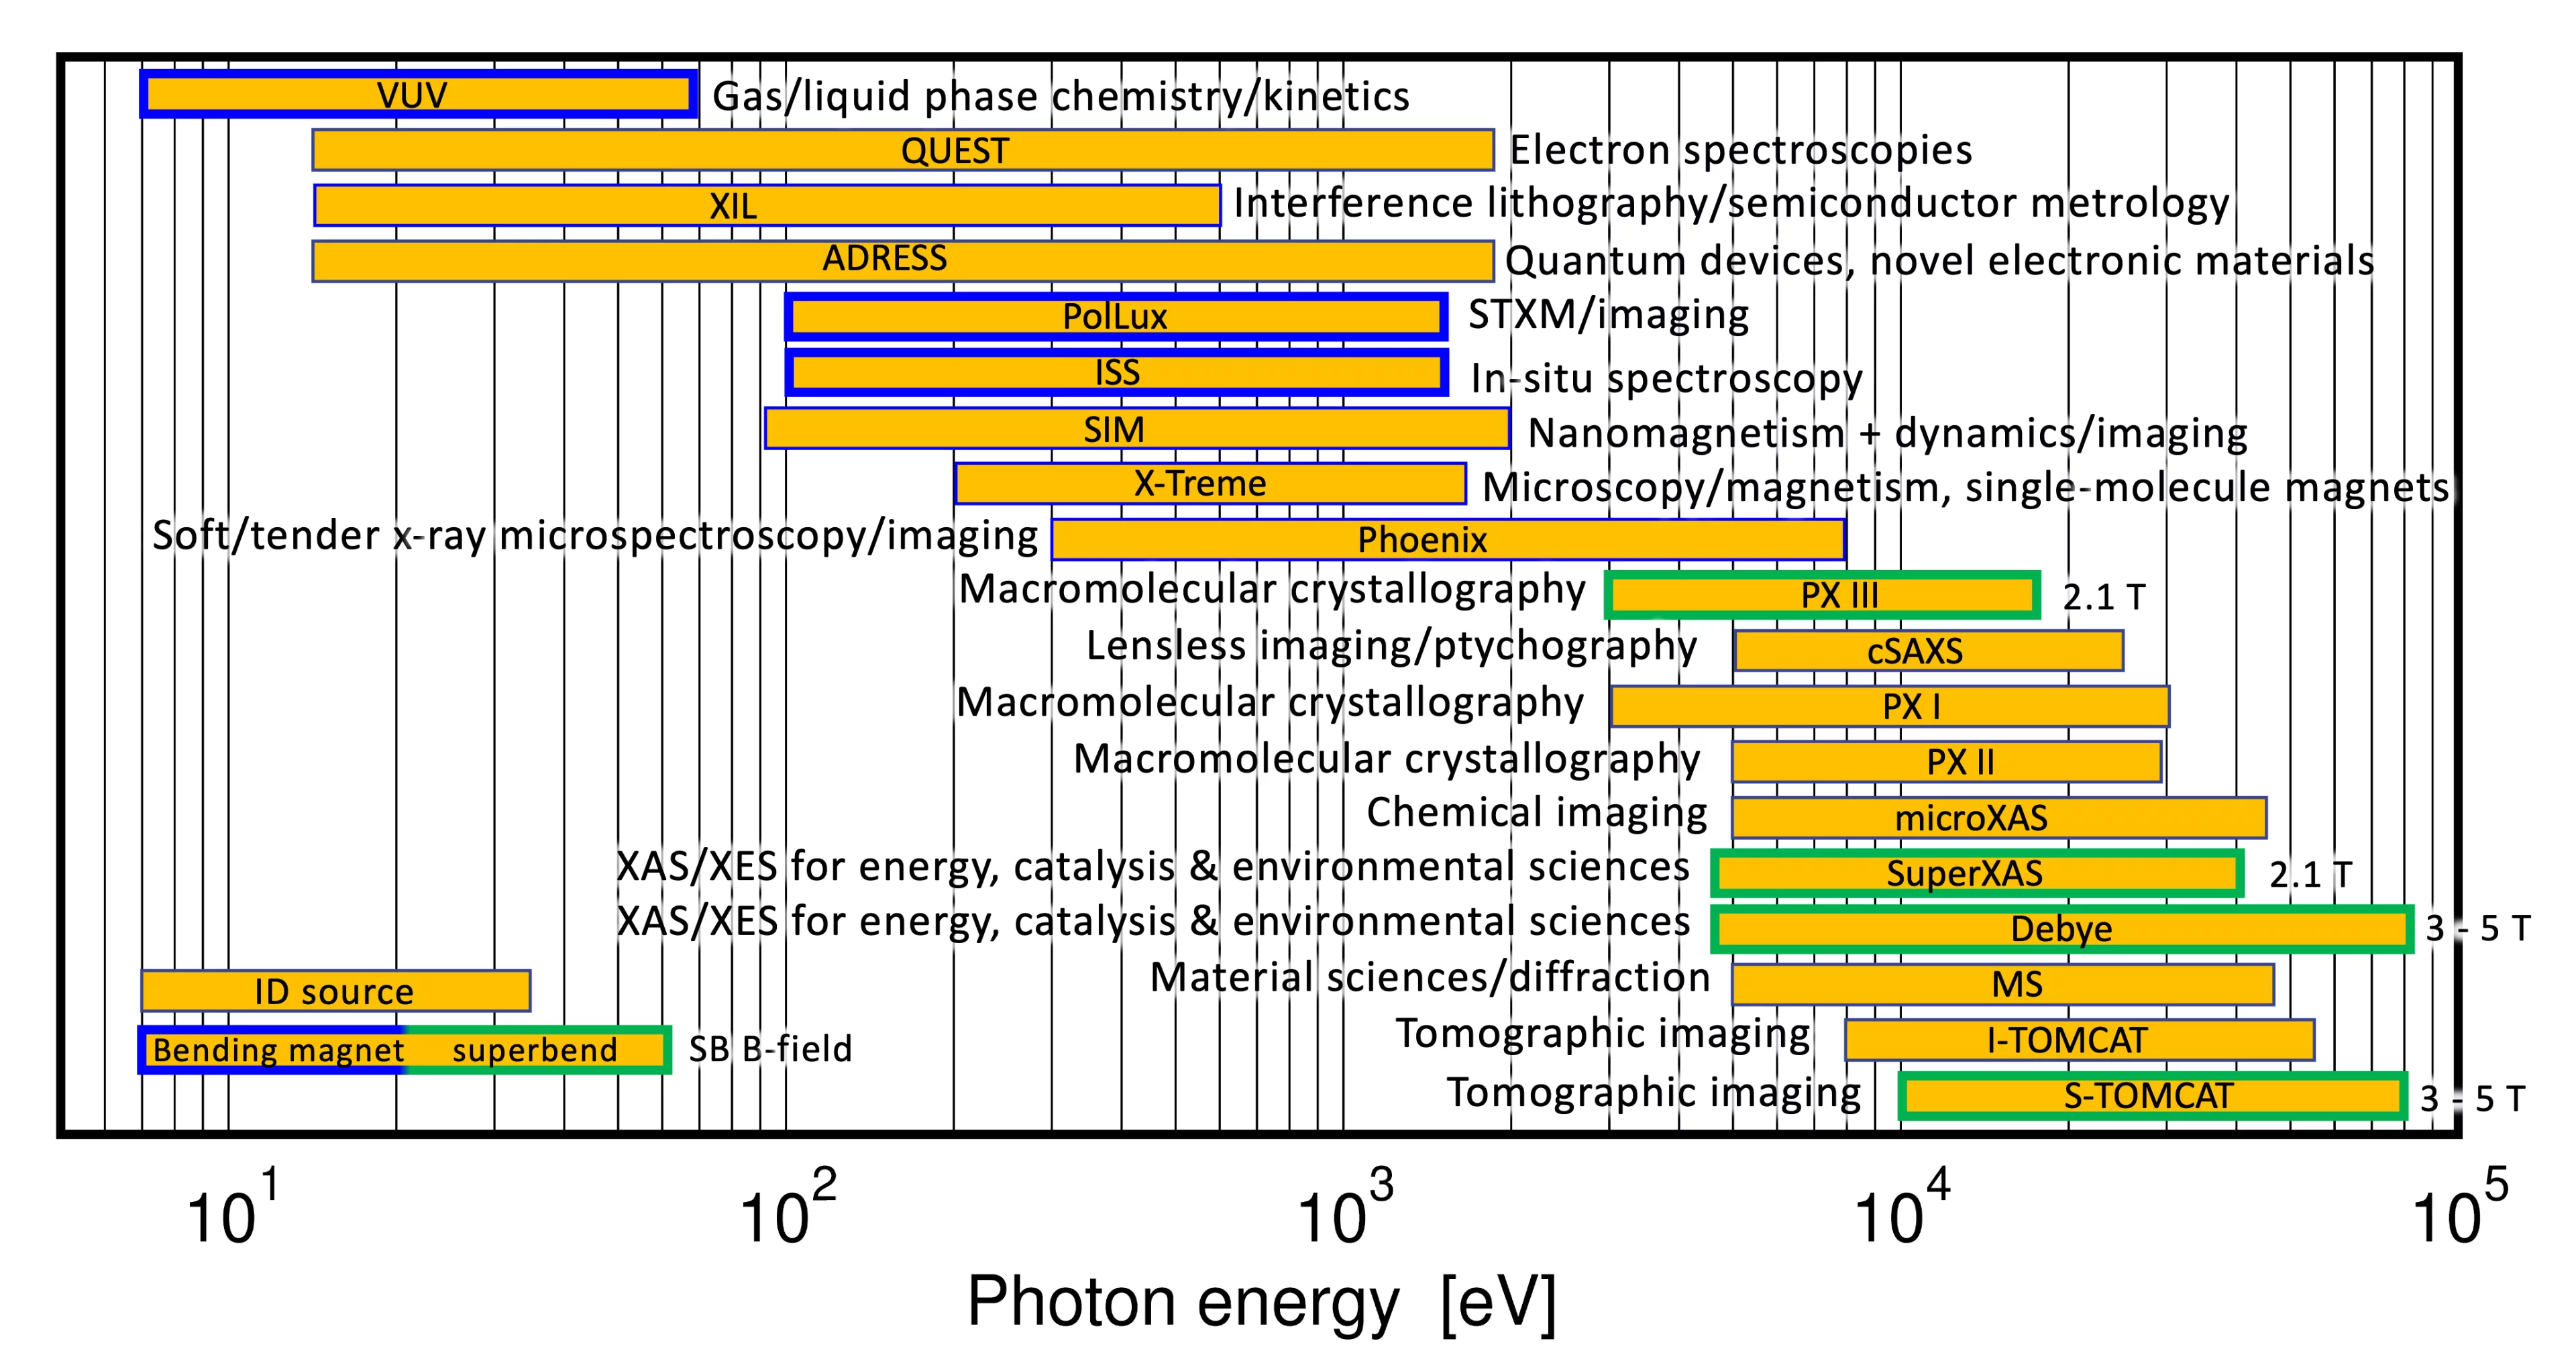 Beamline range of photons [eV]